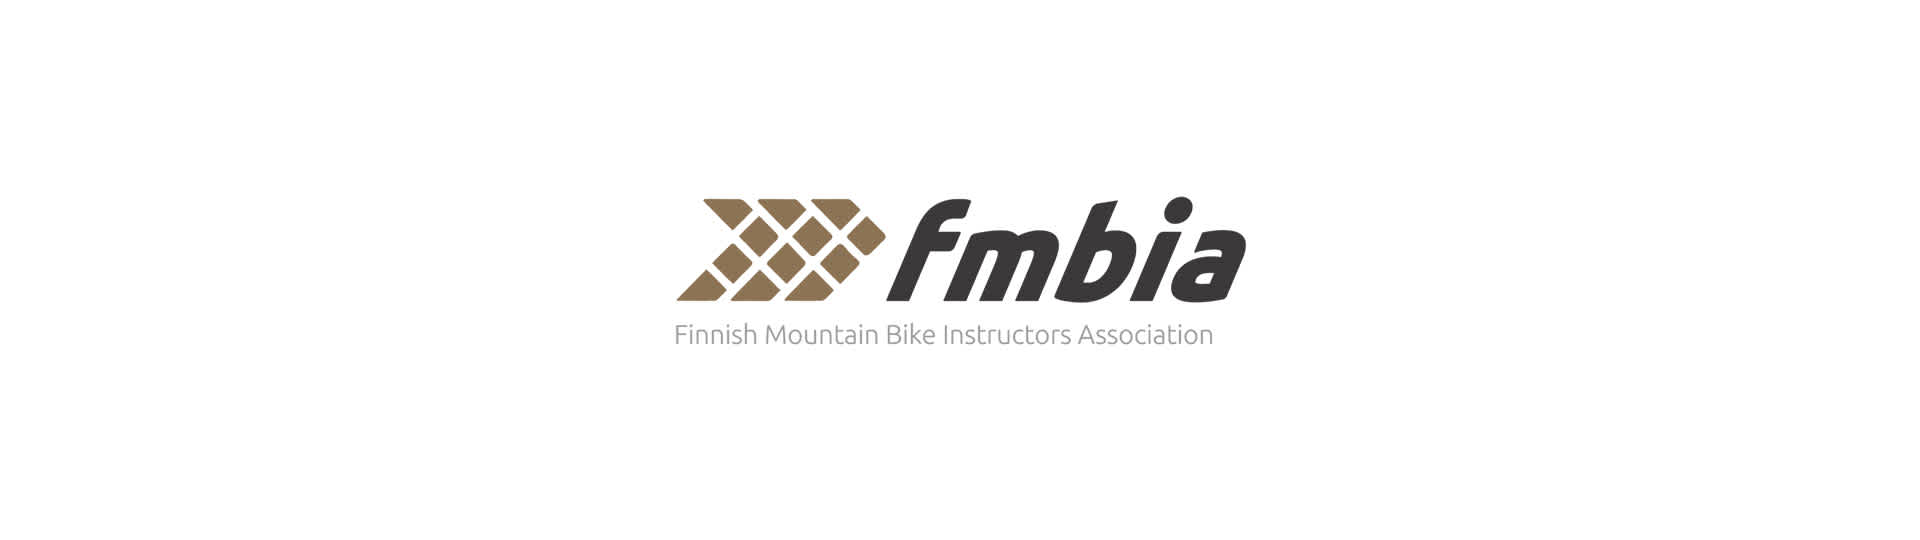 FMBIA logo